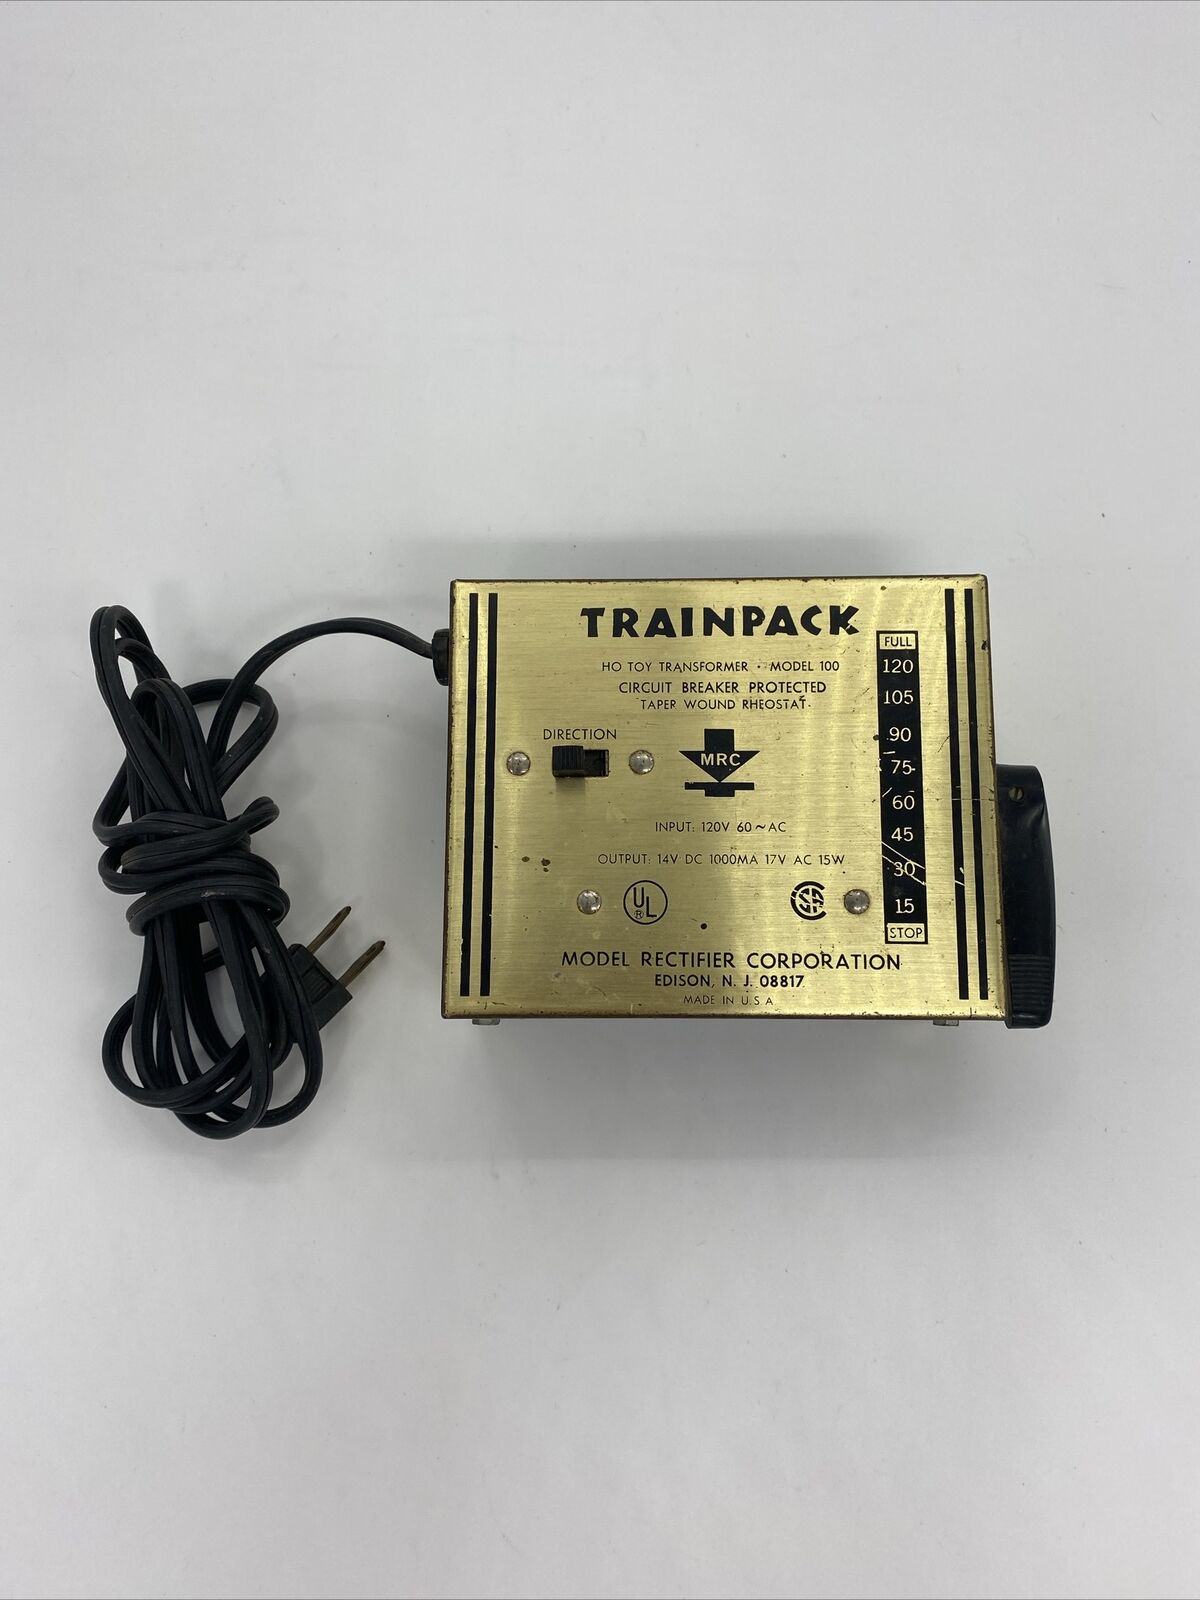 TRAINPACK 100N MRC 100 N GAUGE TRAIN POWER TRANSFORMER